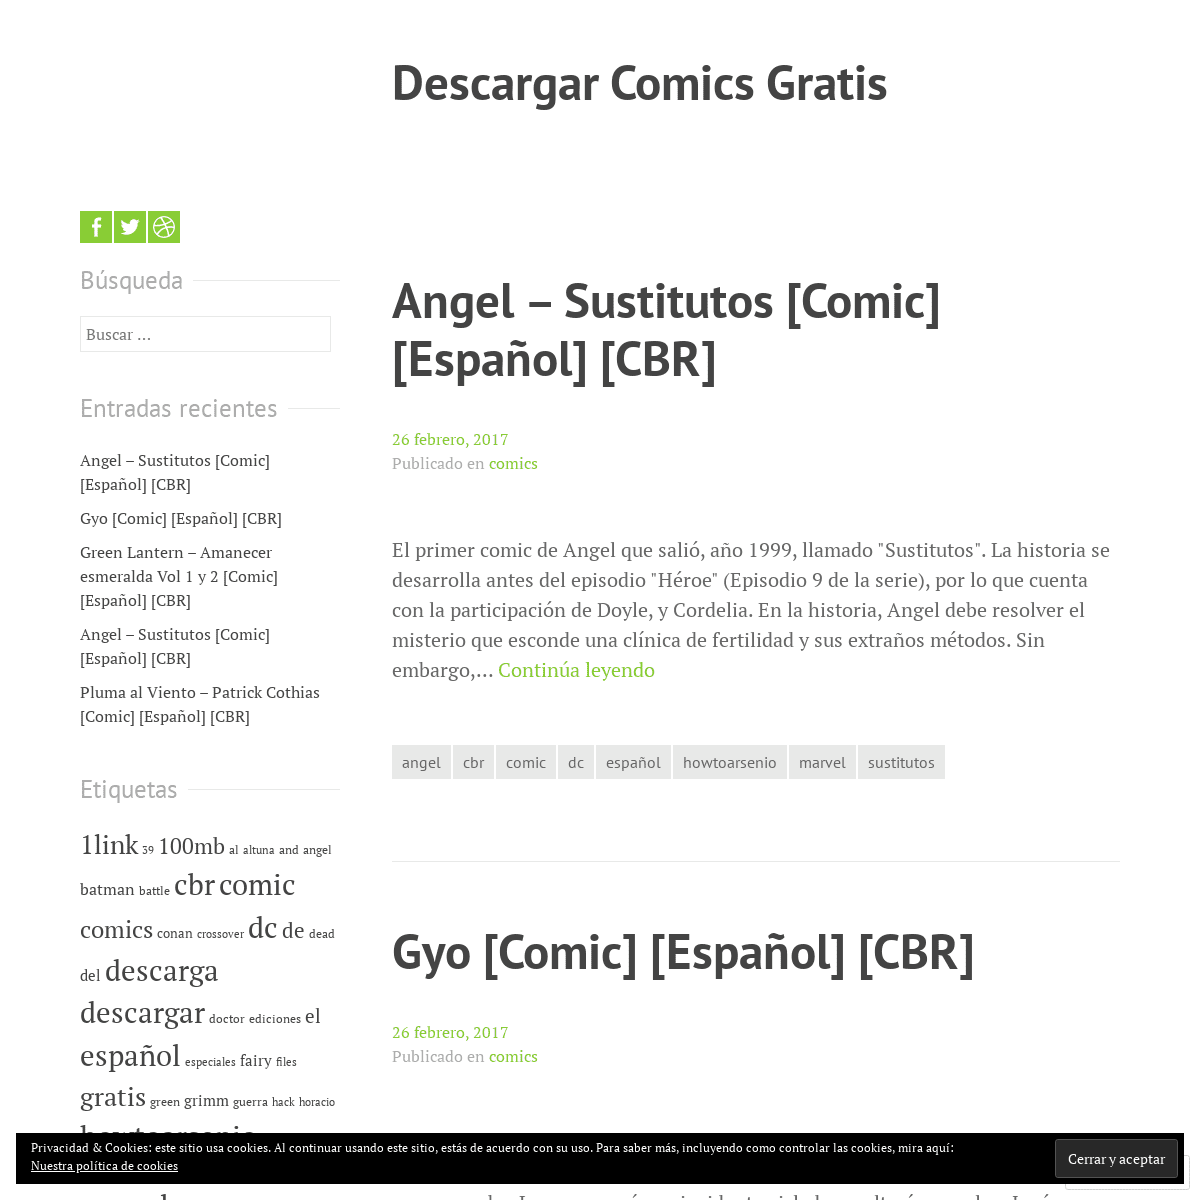 A complete backup of descargarcomicsgratis.wordpress.com